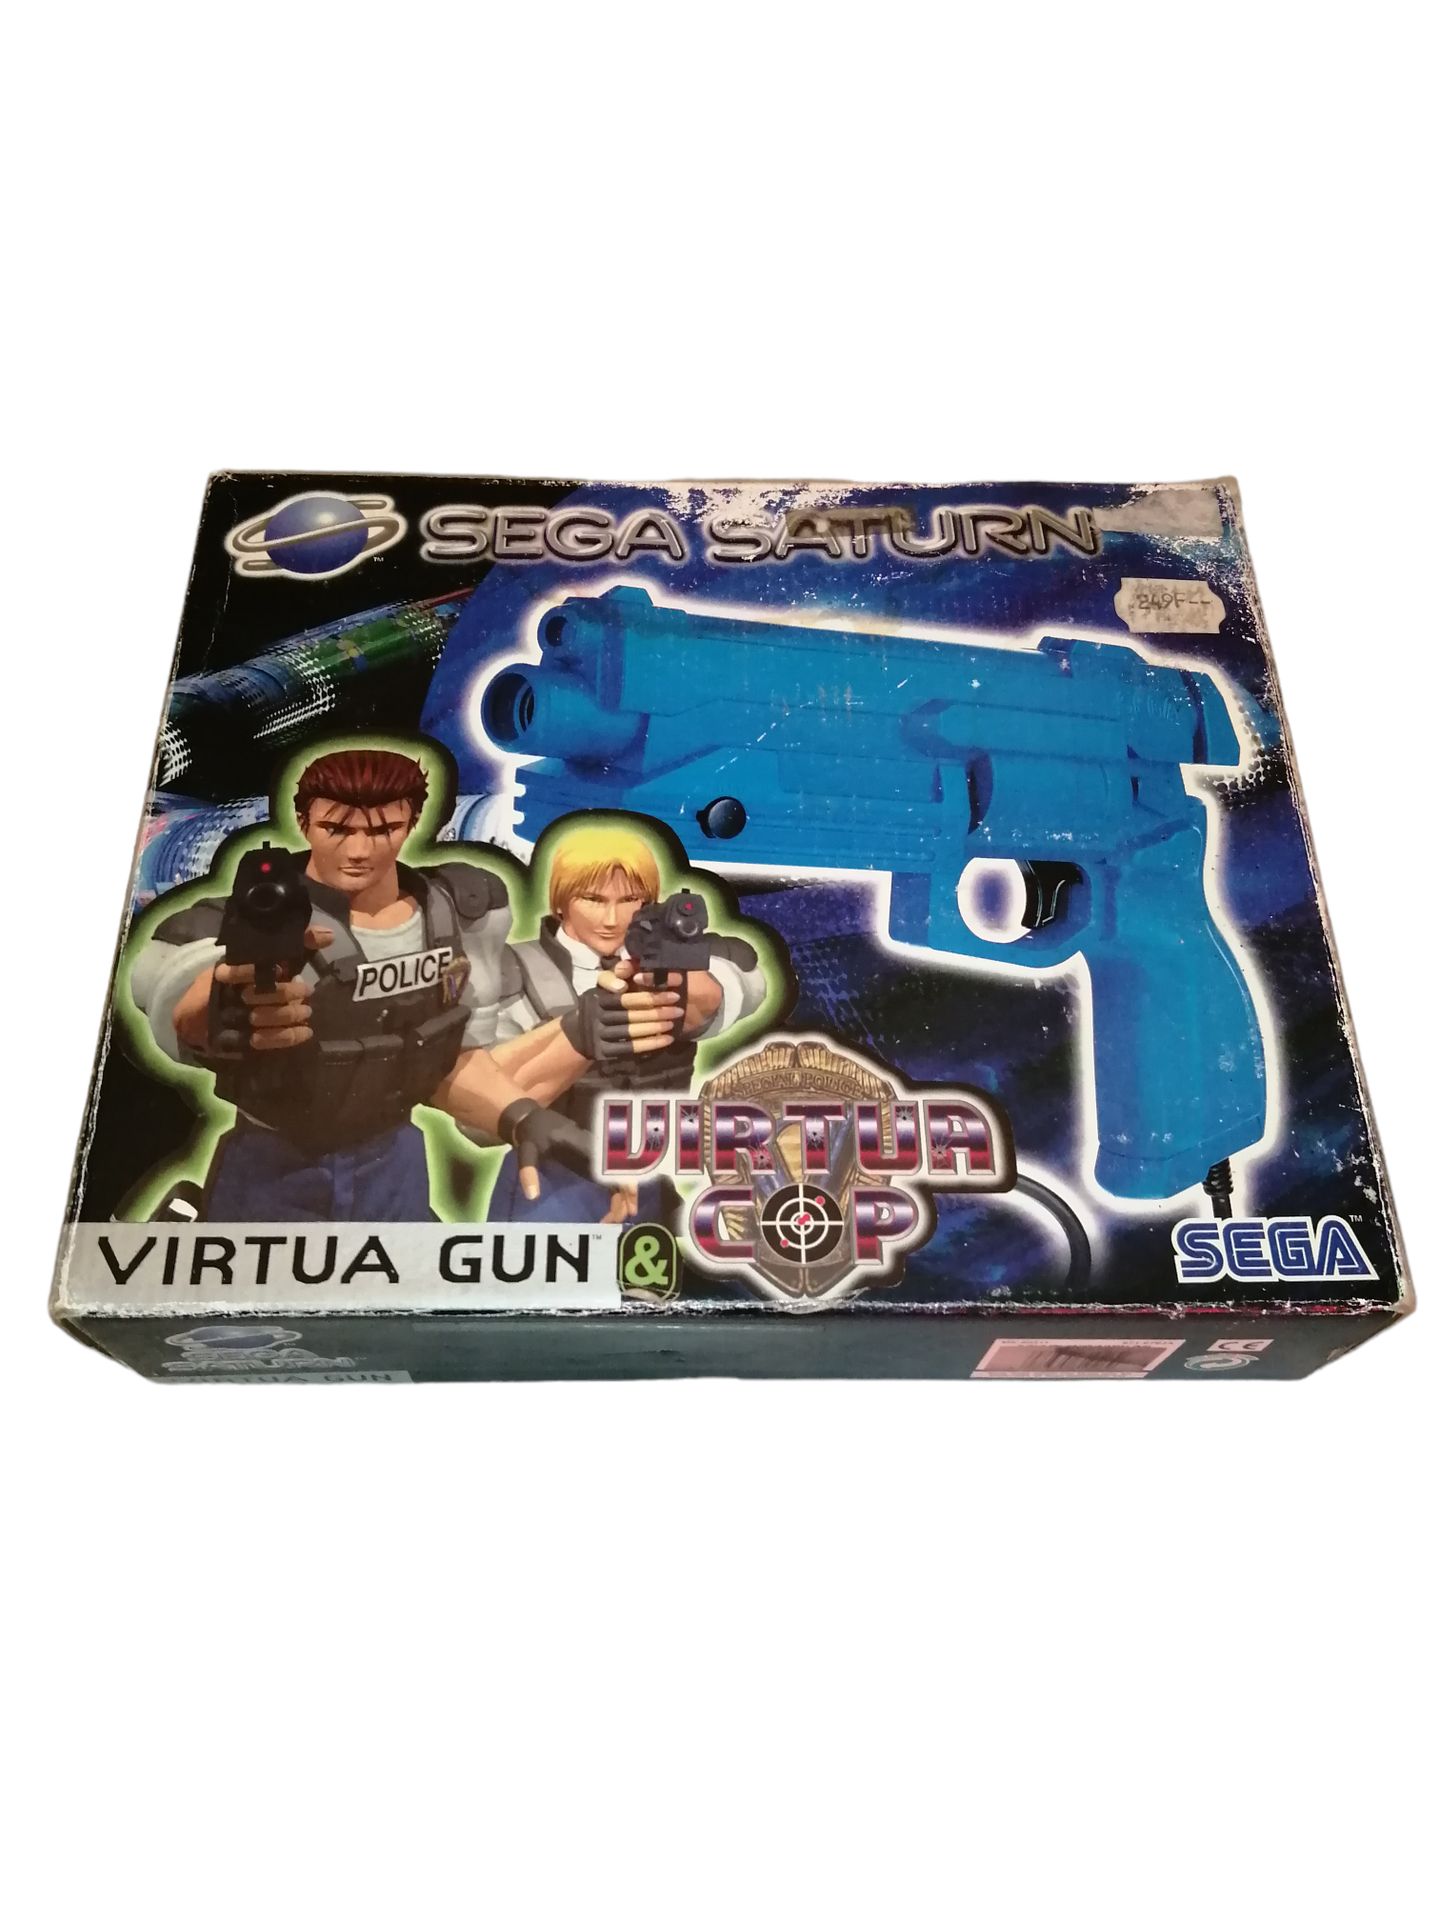 Null SEGA SATURN - Virtua Gun Virtua Cop.
Boite en mauvais état,
Intérieur propr&hellip;